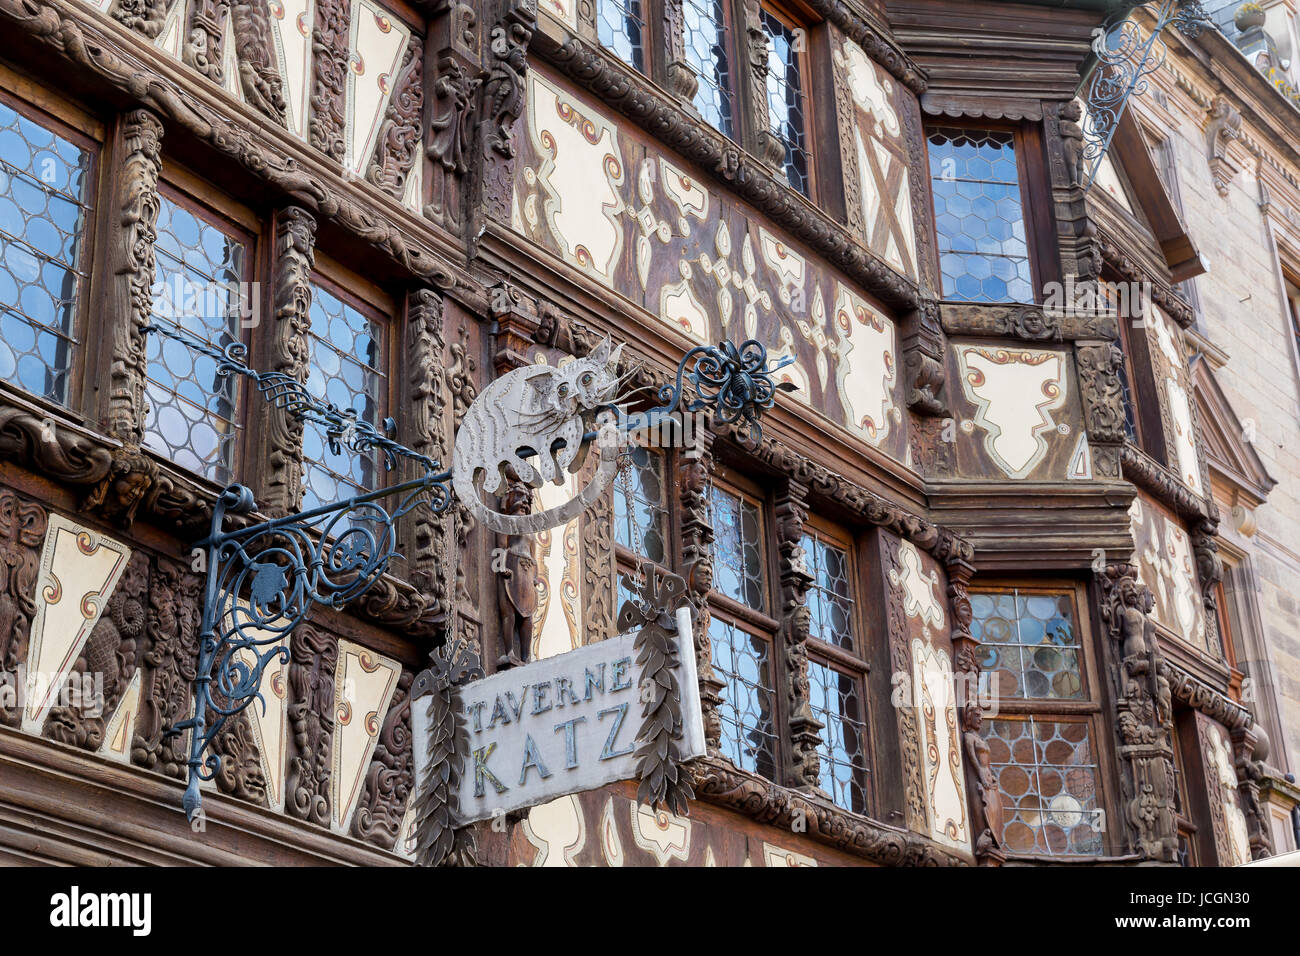 Maison Katz house from 17th Century (Taverne Katz), Saverne, Alsace, France. Stock Photo